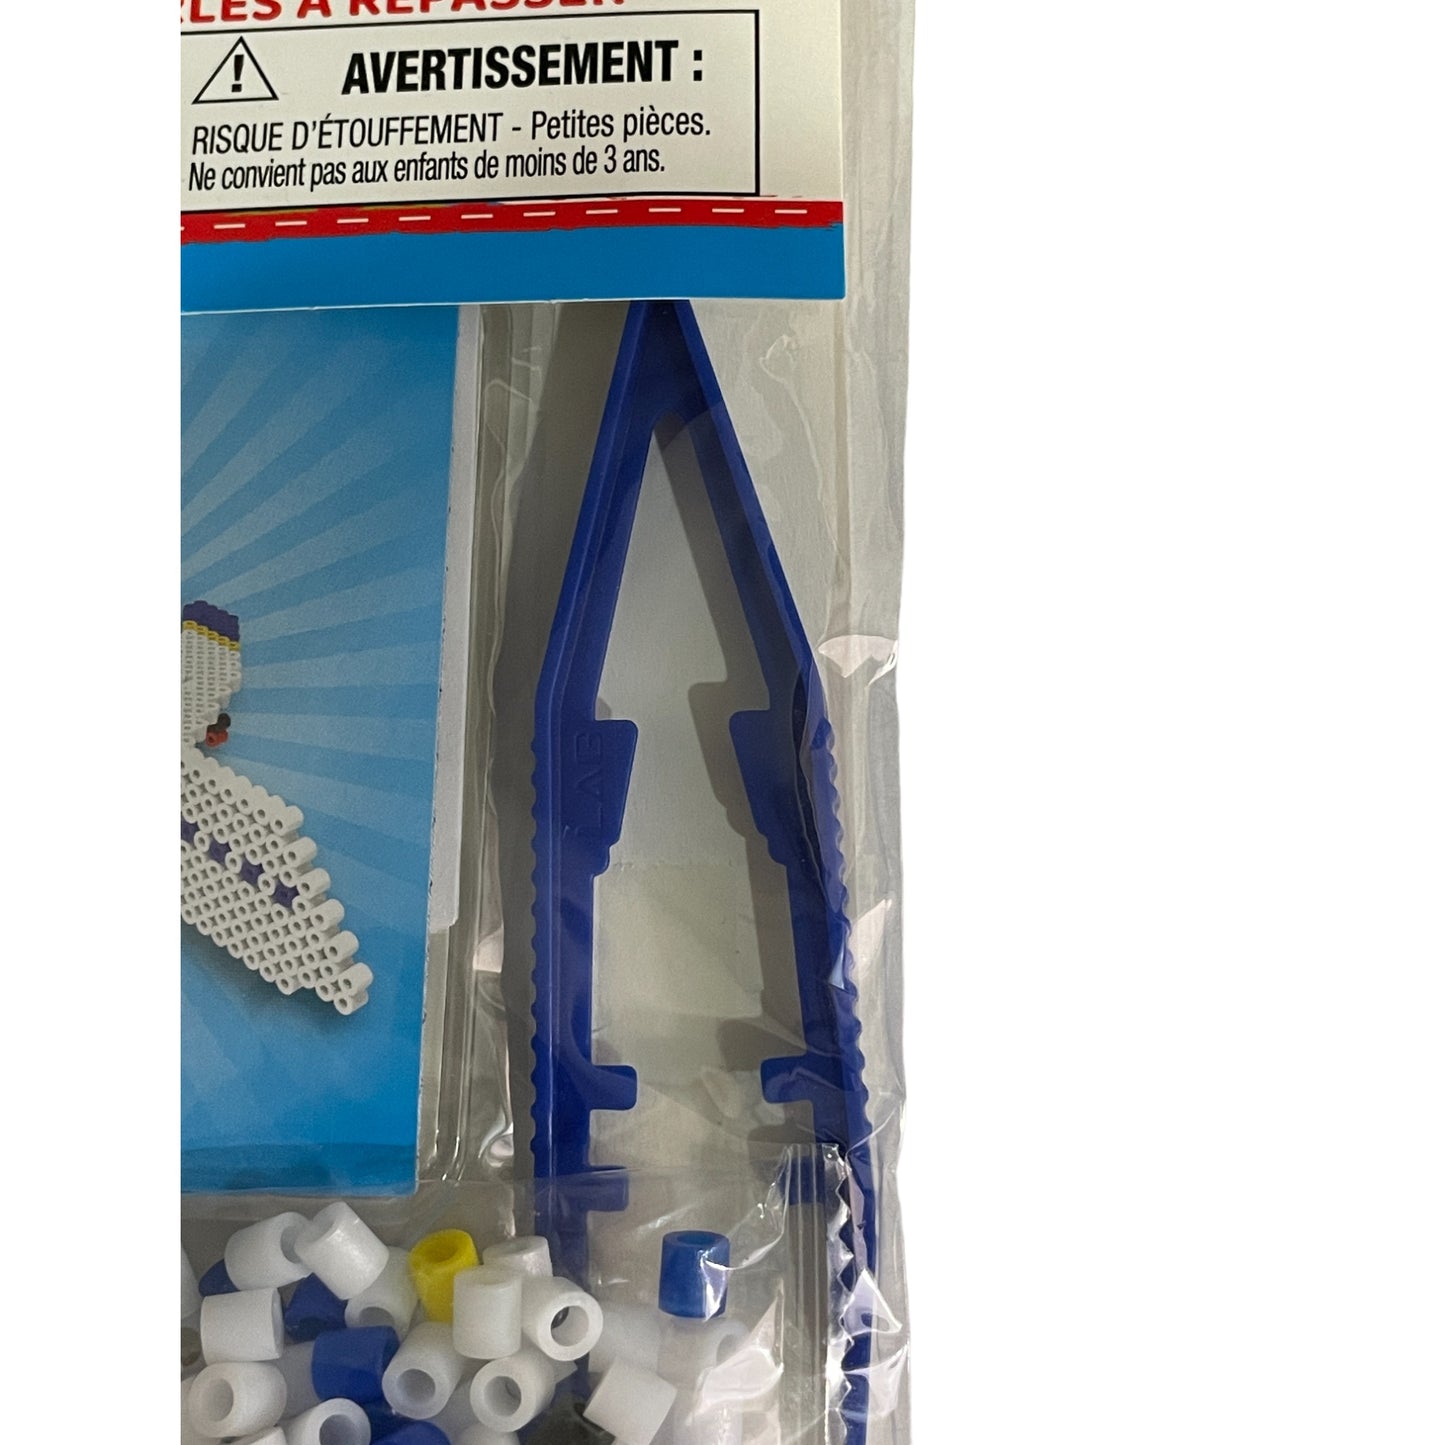 3D Airplane Kit: Heat & Fuse Melting Beads (733pcs)-DIY Craft for Kids & Adults